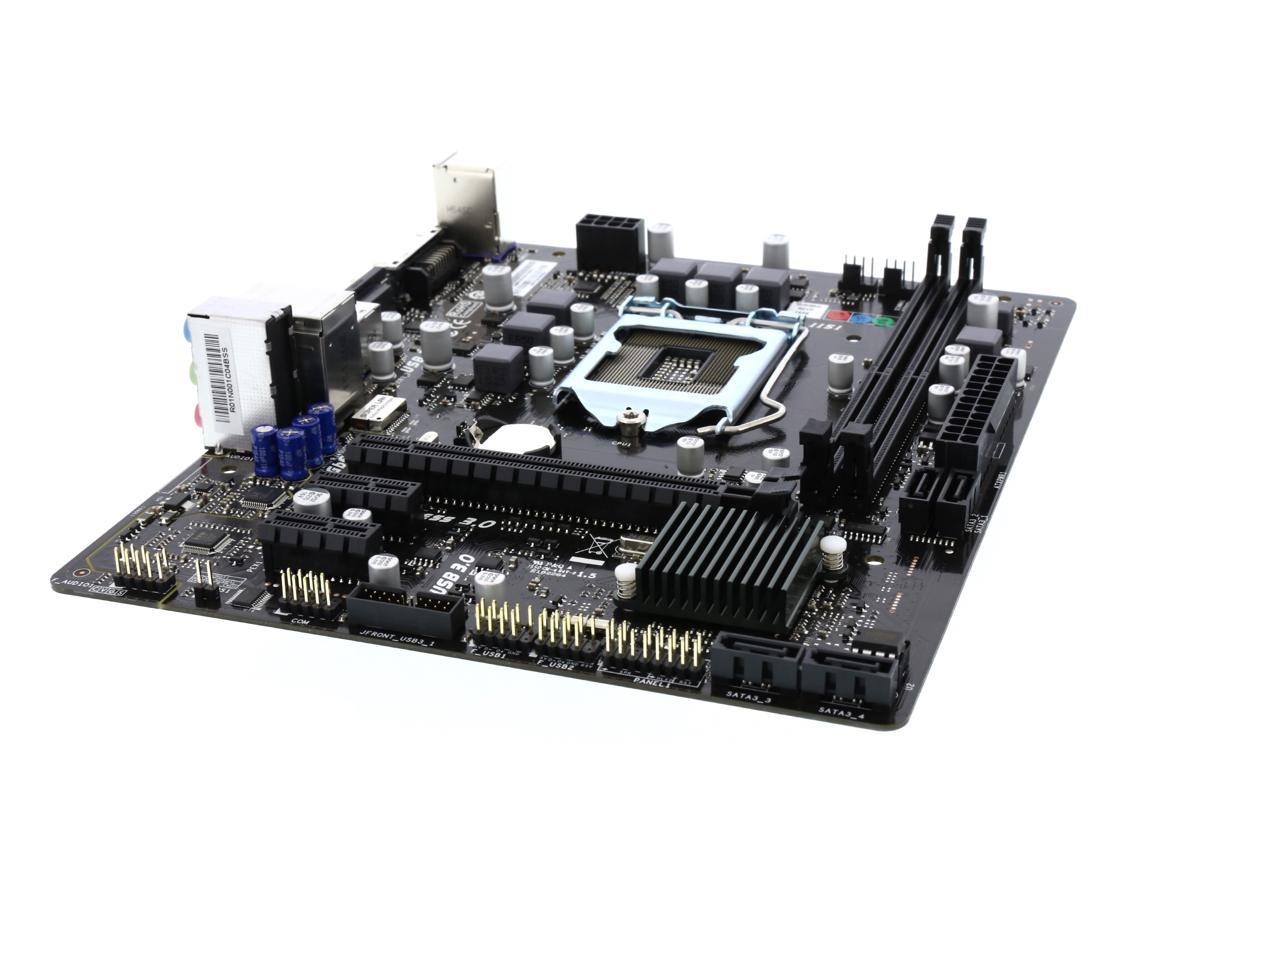 BIOSTAR Hi-Fi B150S1 D4 Ver. 6.x LGA 1151 Intel B150 SATA 6Gb/s USB 3.0  Micro ATX Intel Motherboard